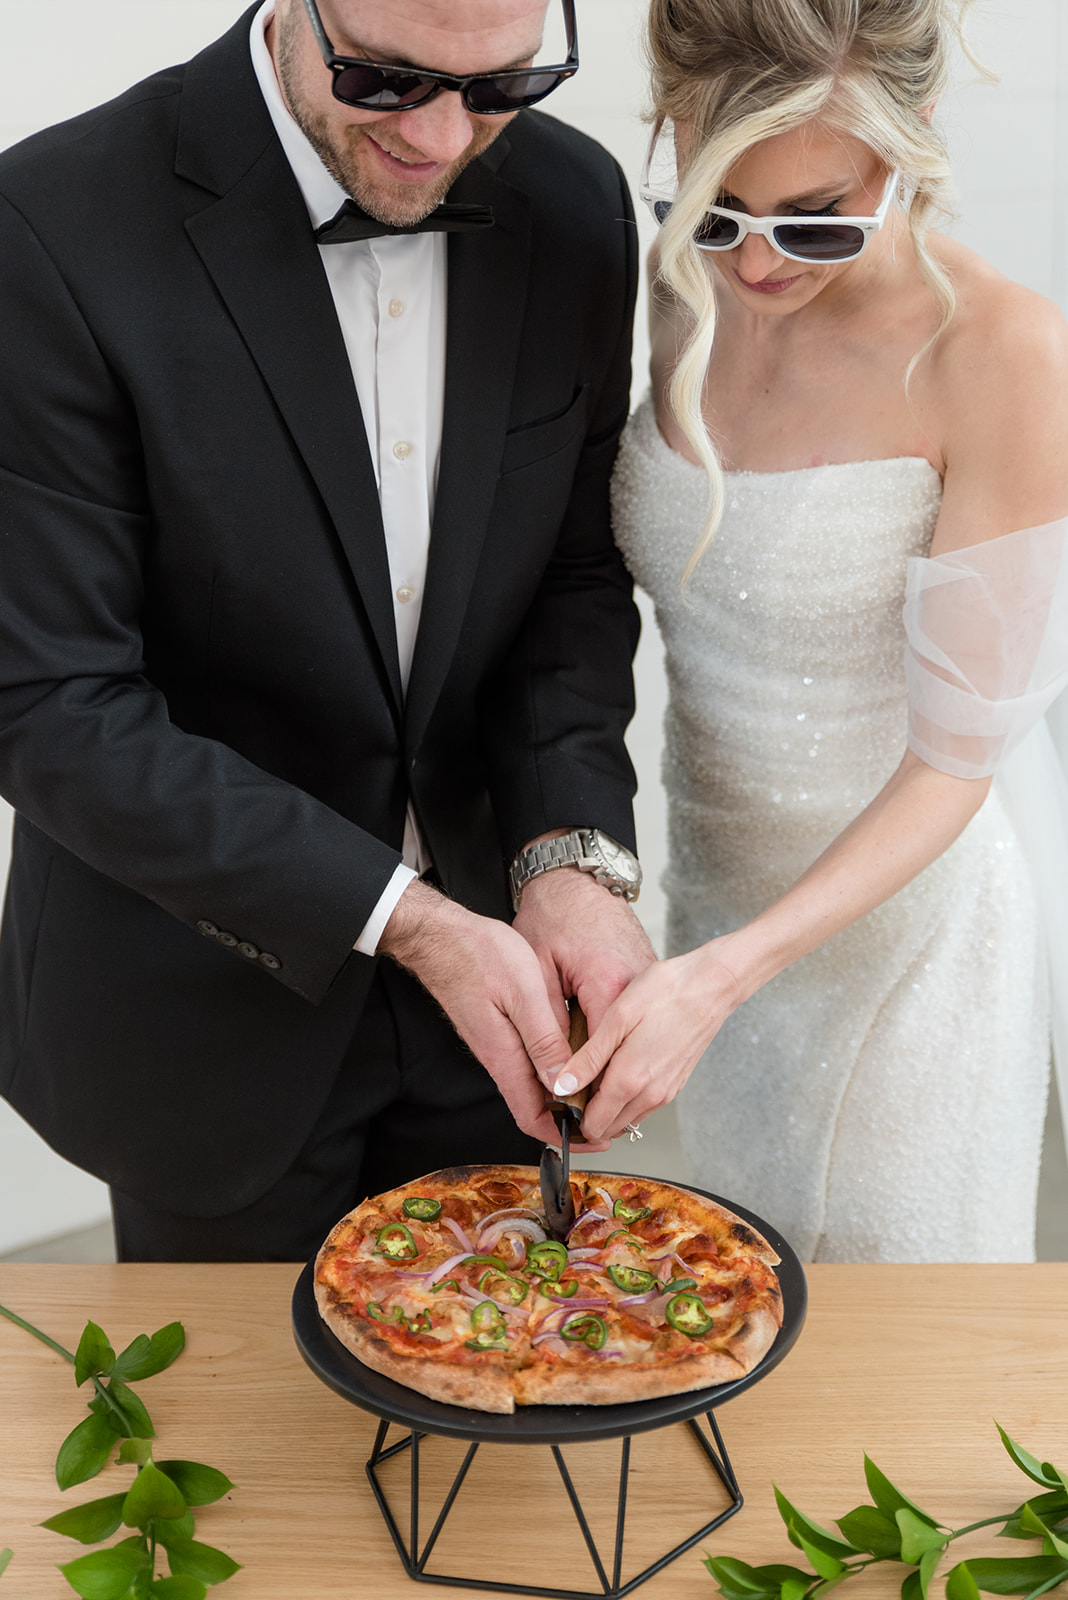 La Pointe Events bride and groom have a pizza pie